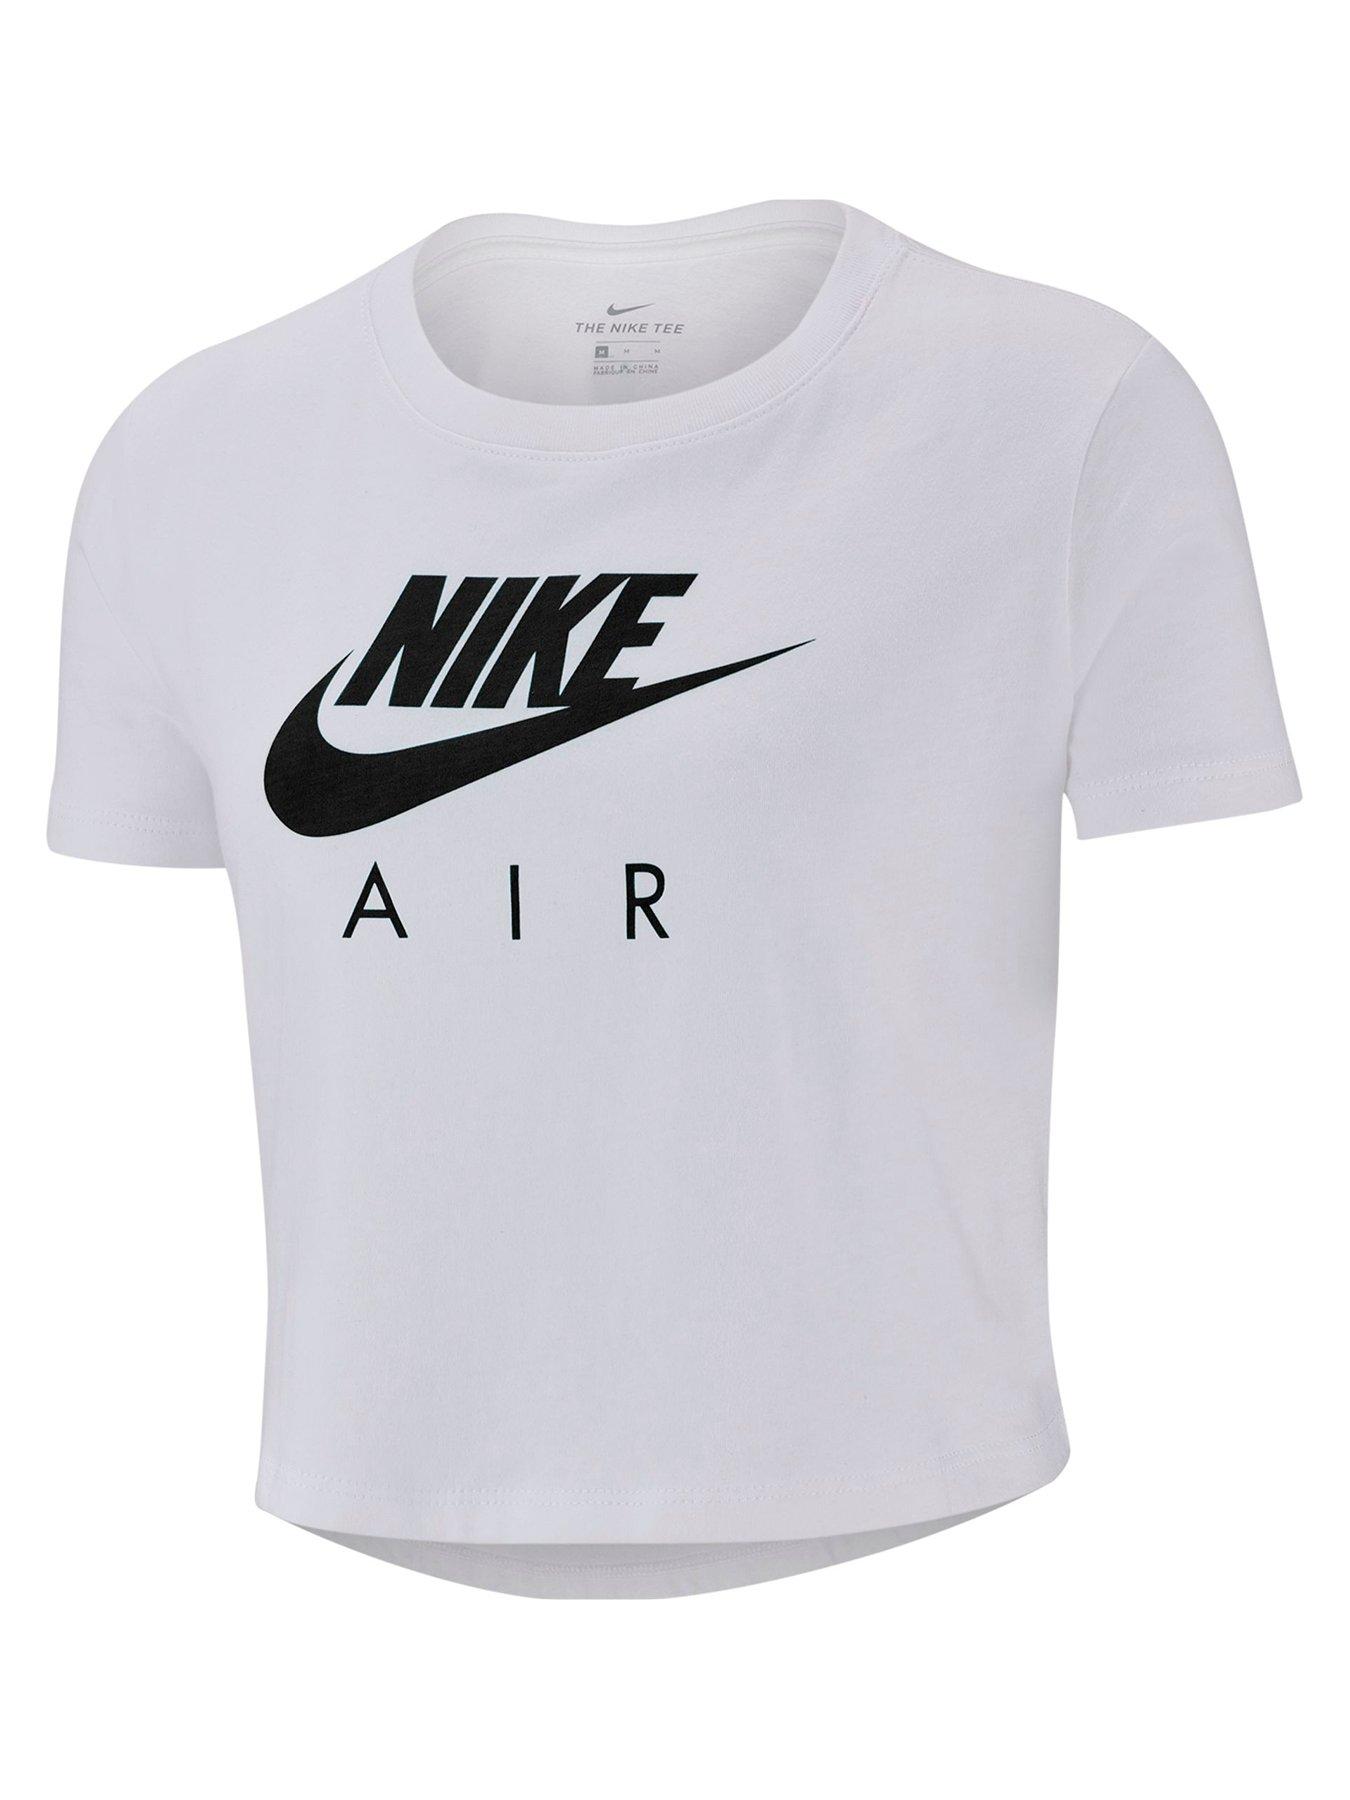 Nike Air Girls Crop T-Shirt - White 